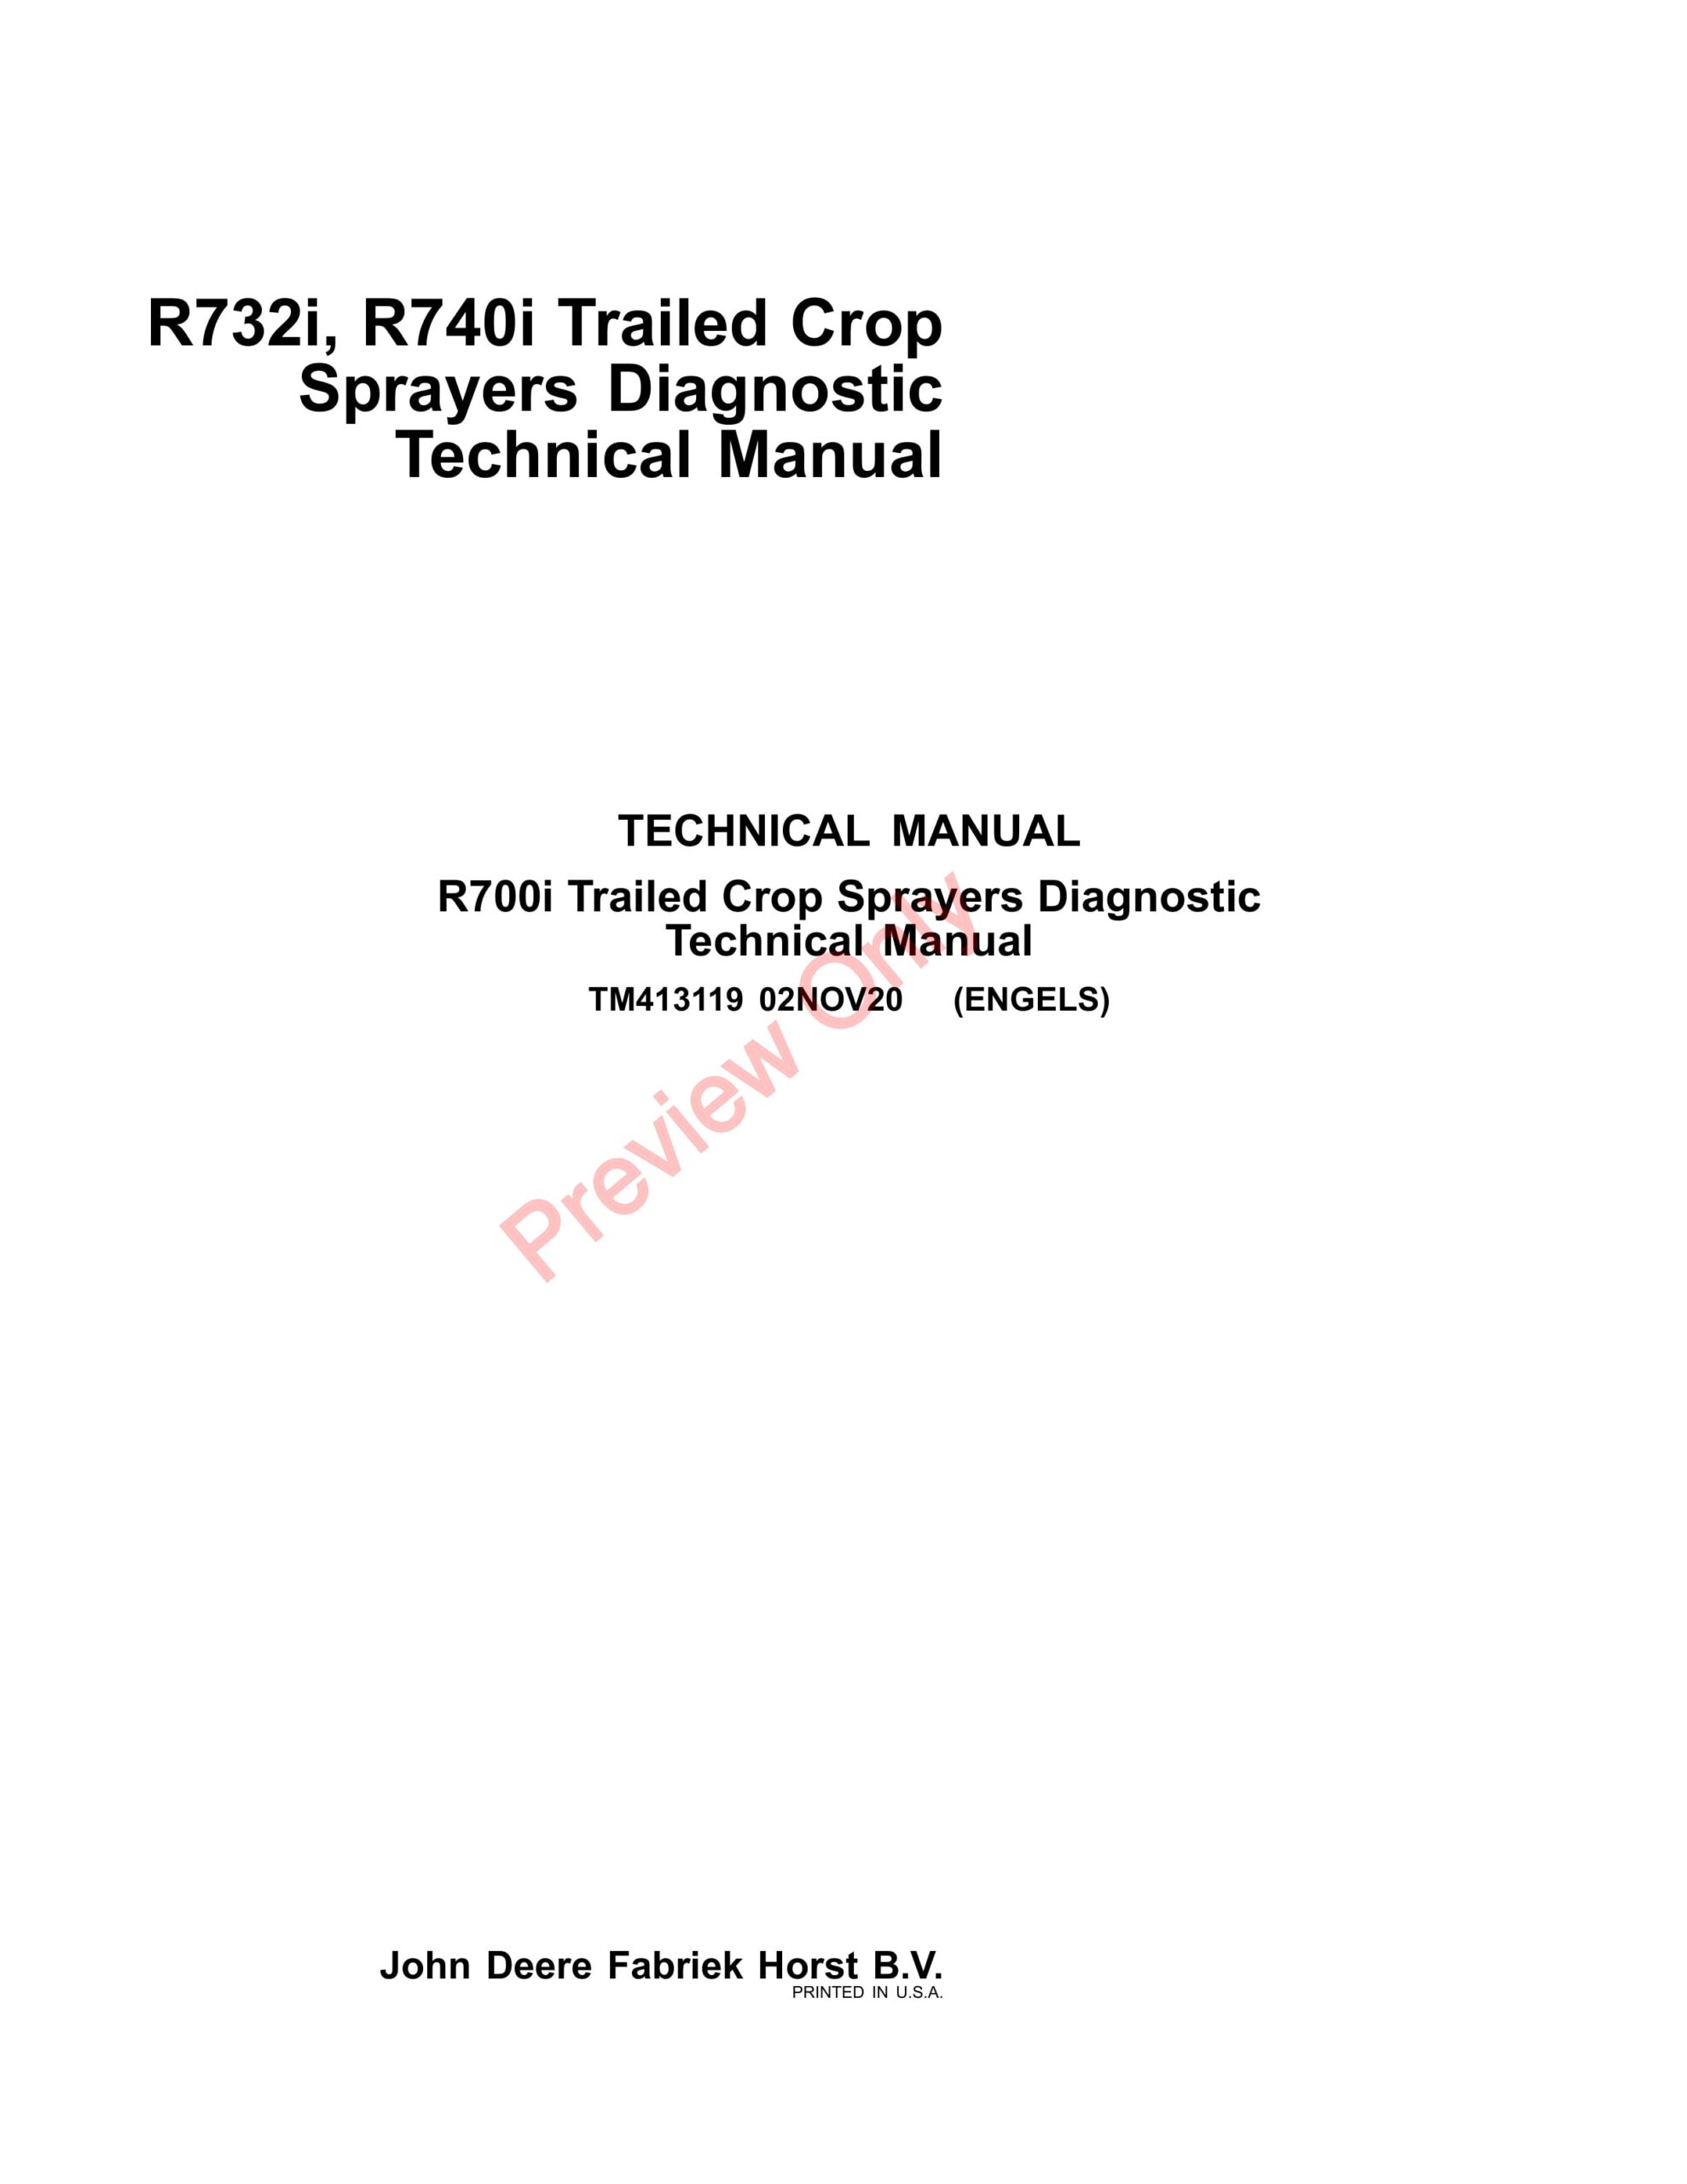 John Deere R732i and R740i Trailed Crop Sprayers Technical Manual TM413119 02NOV20-1